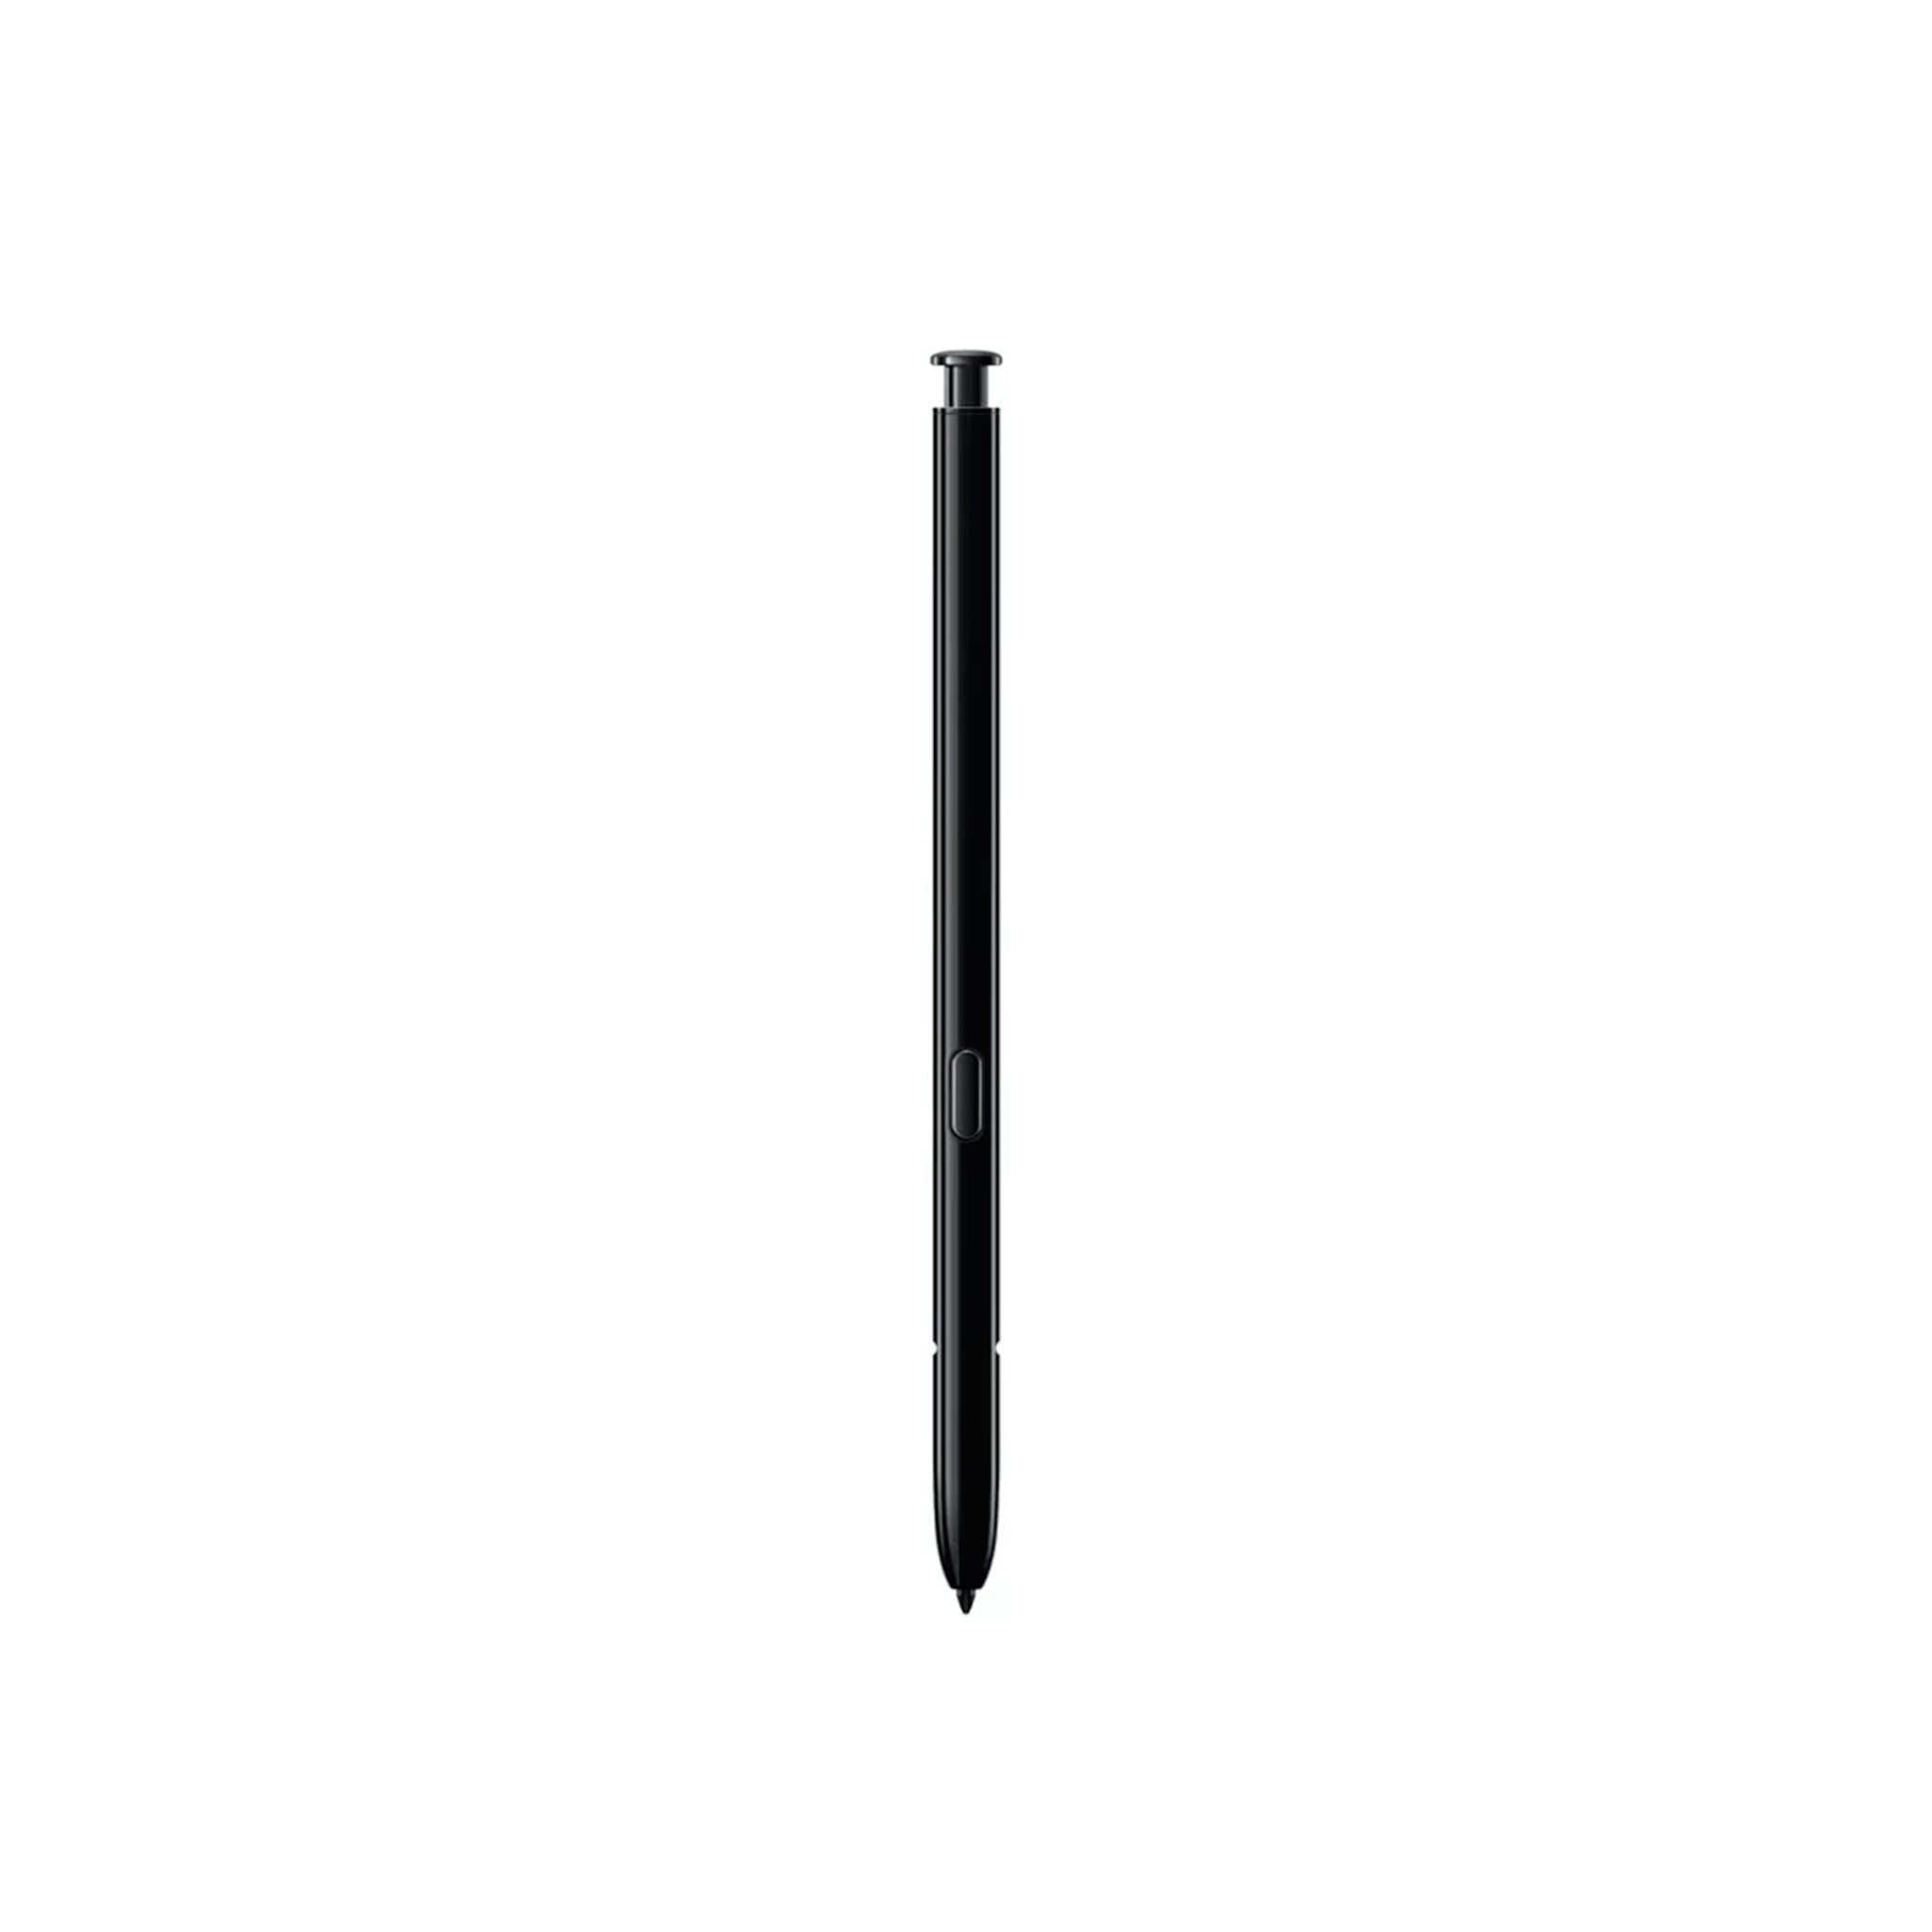 Samsung - Galaxy Note 20 & Note 20 Plus S Pen Air Action Remote Control - Black